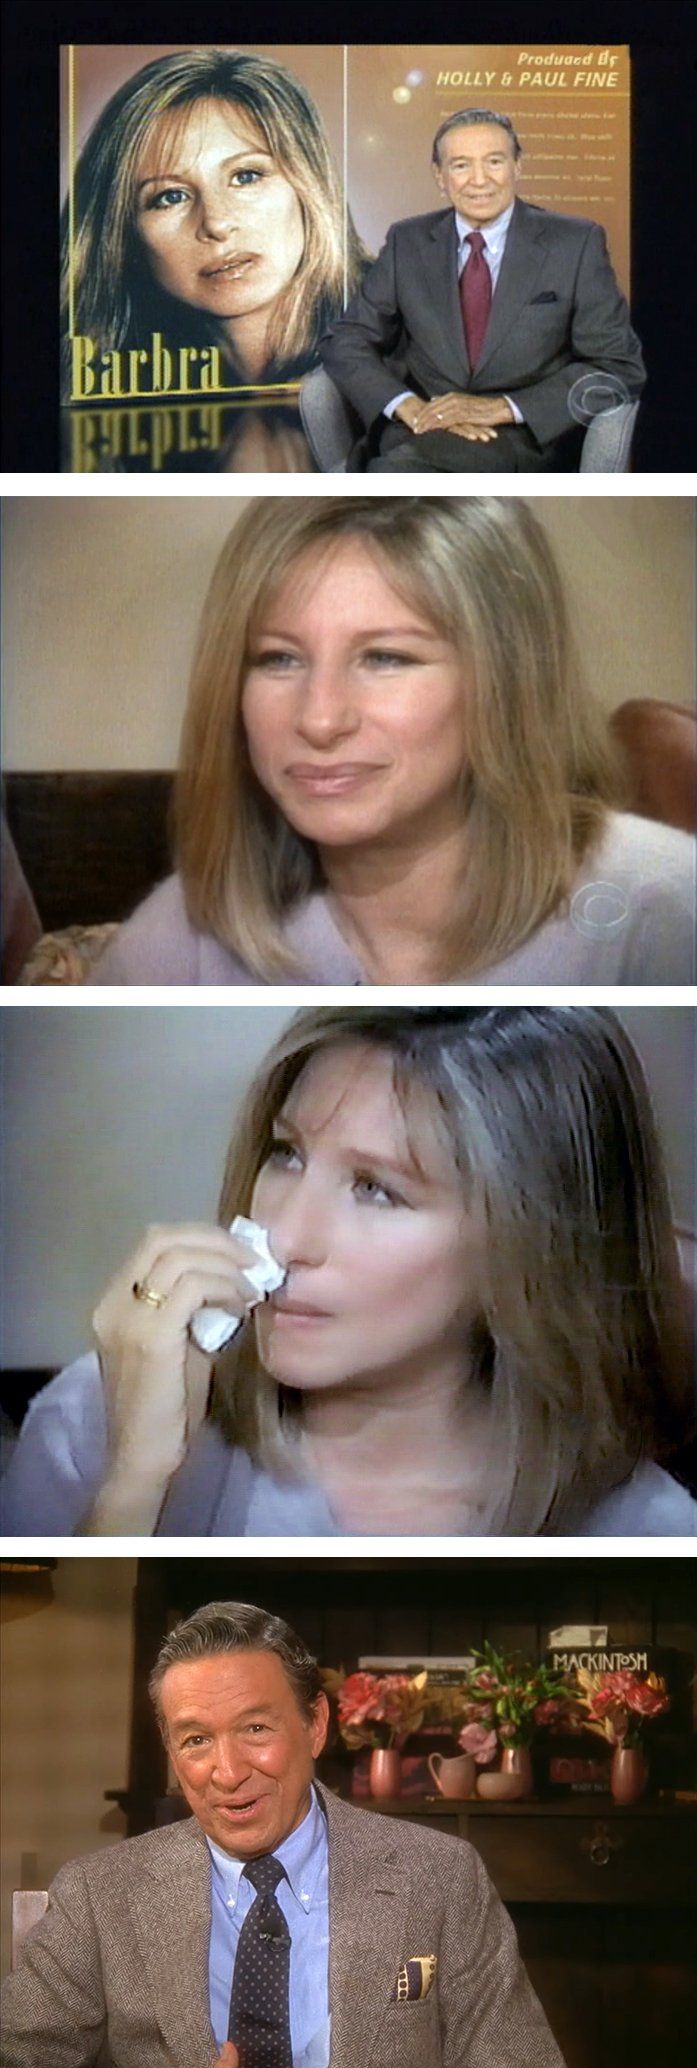 Screen caps of Barbra Streisand's interview on 60 Minutes.